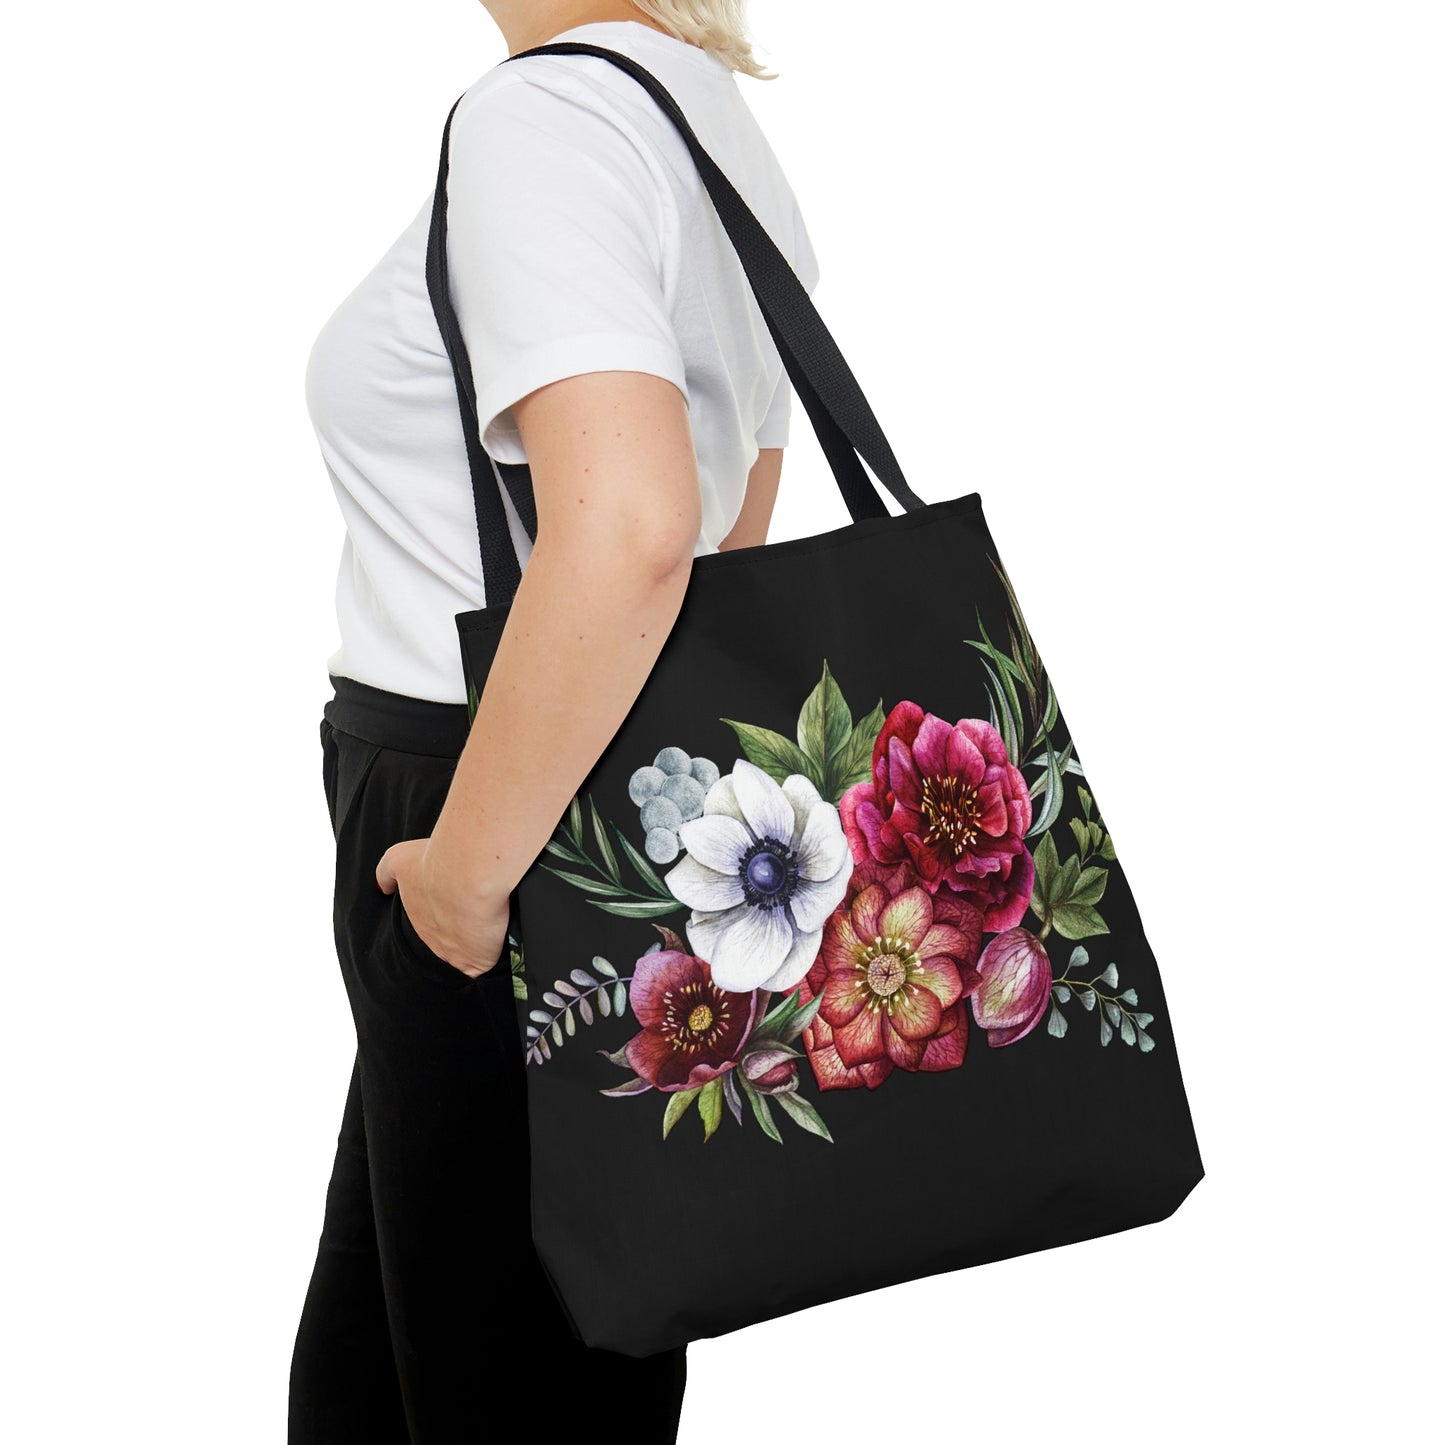 Tote Bag Dahlia Flowers on Black Tote bag